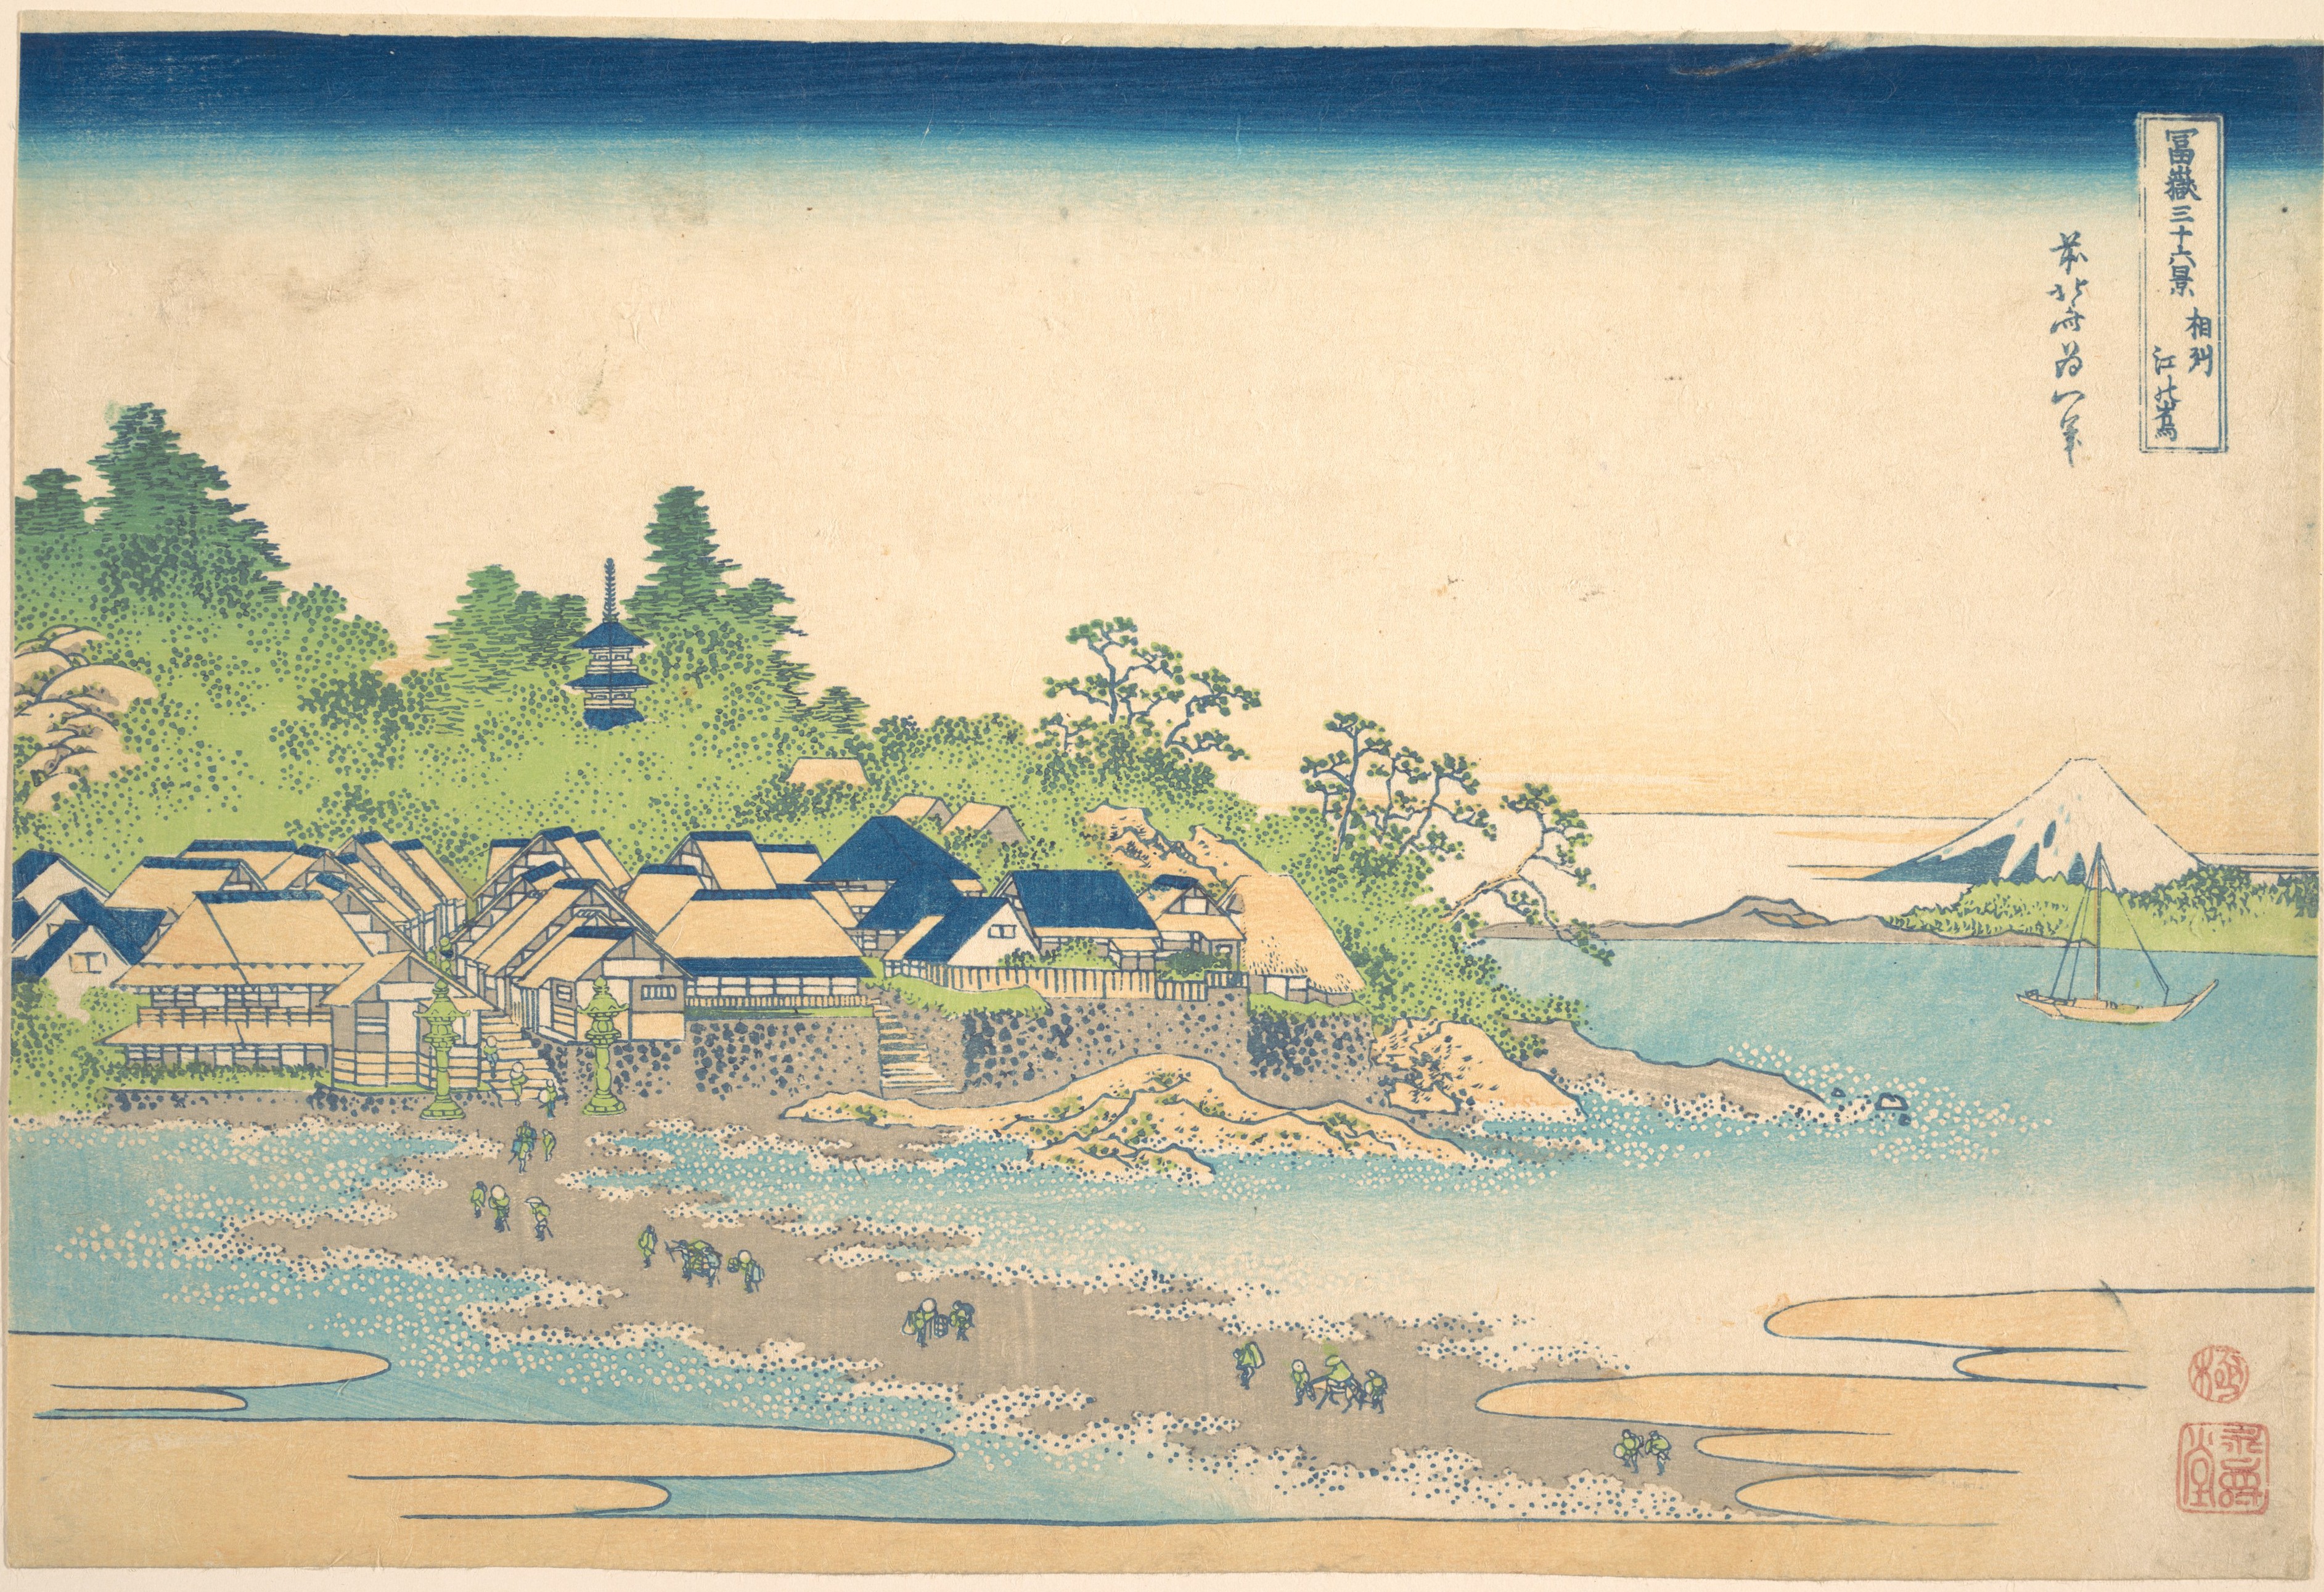 Katsushika Hokusai. Enoshima in Sagami Province, from the series Thirty-six Views of Mount Fuji